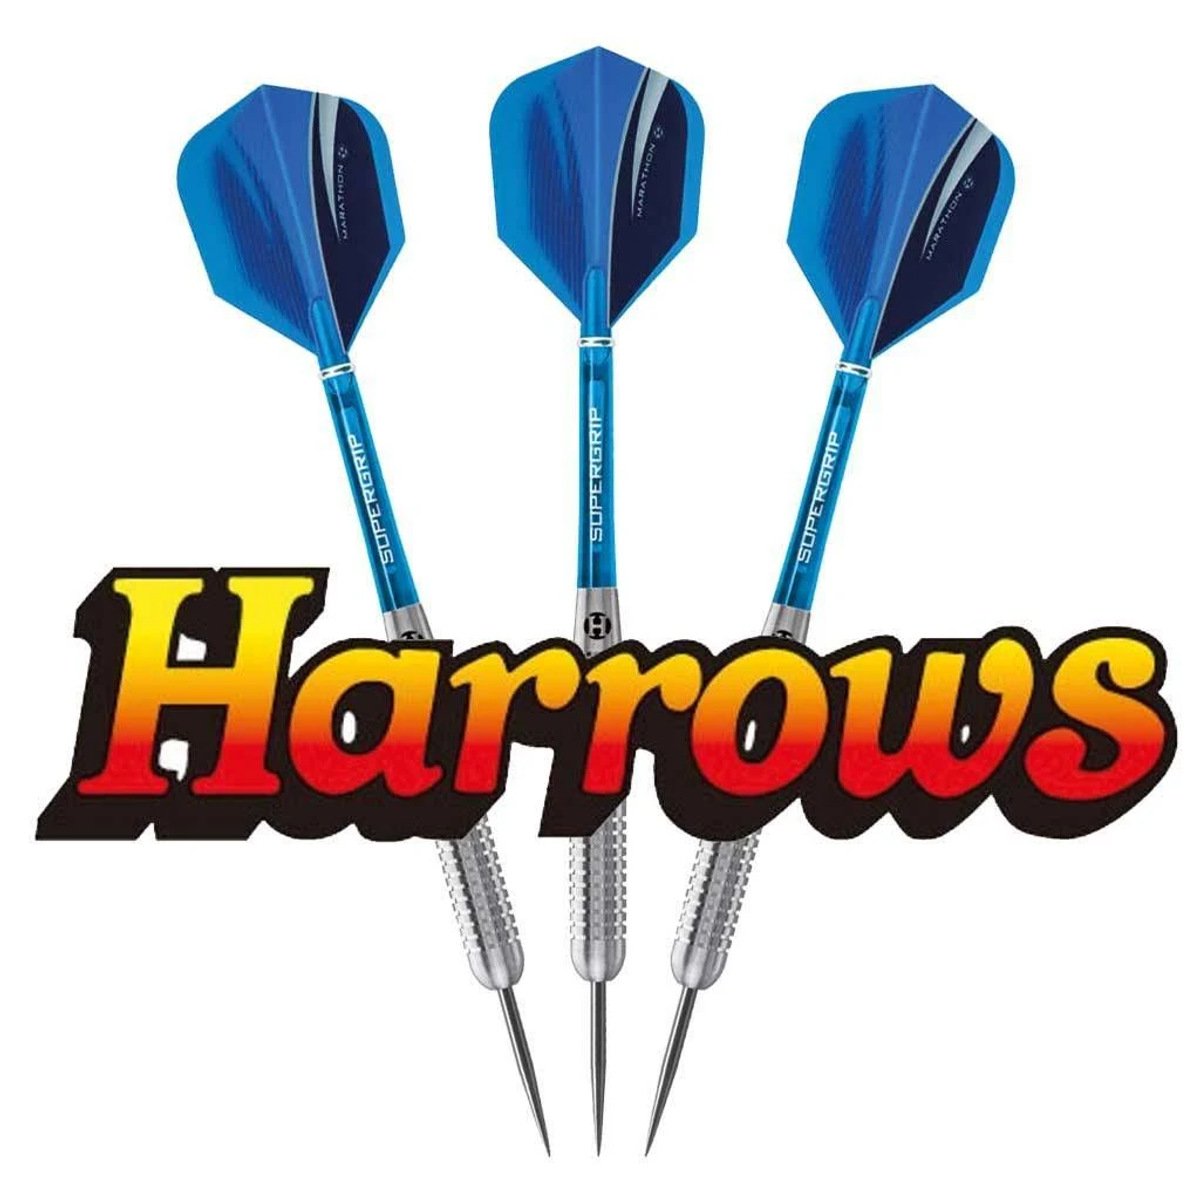 HARROWS DATG21 Dartpfeile Mehrfarbig